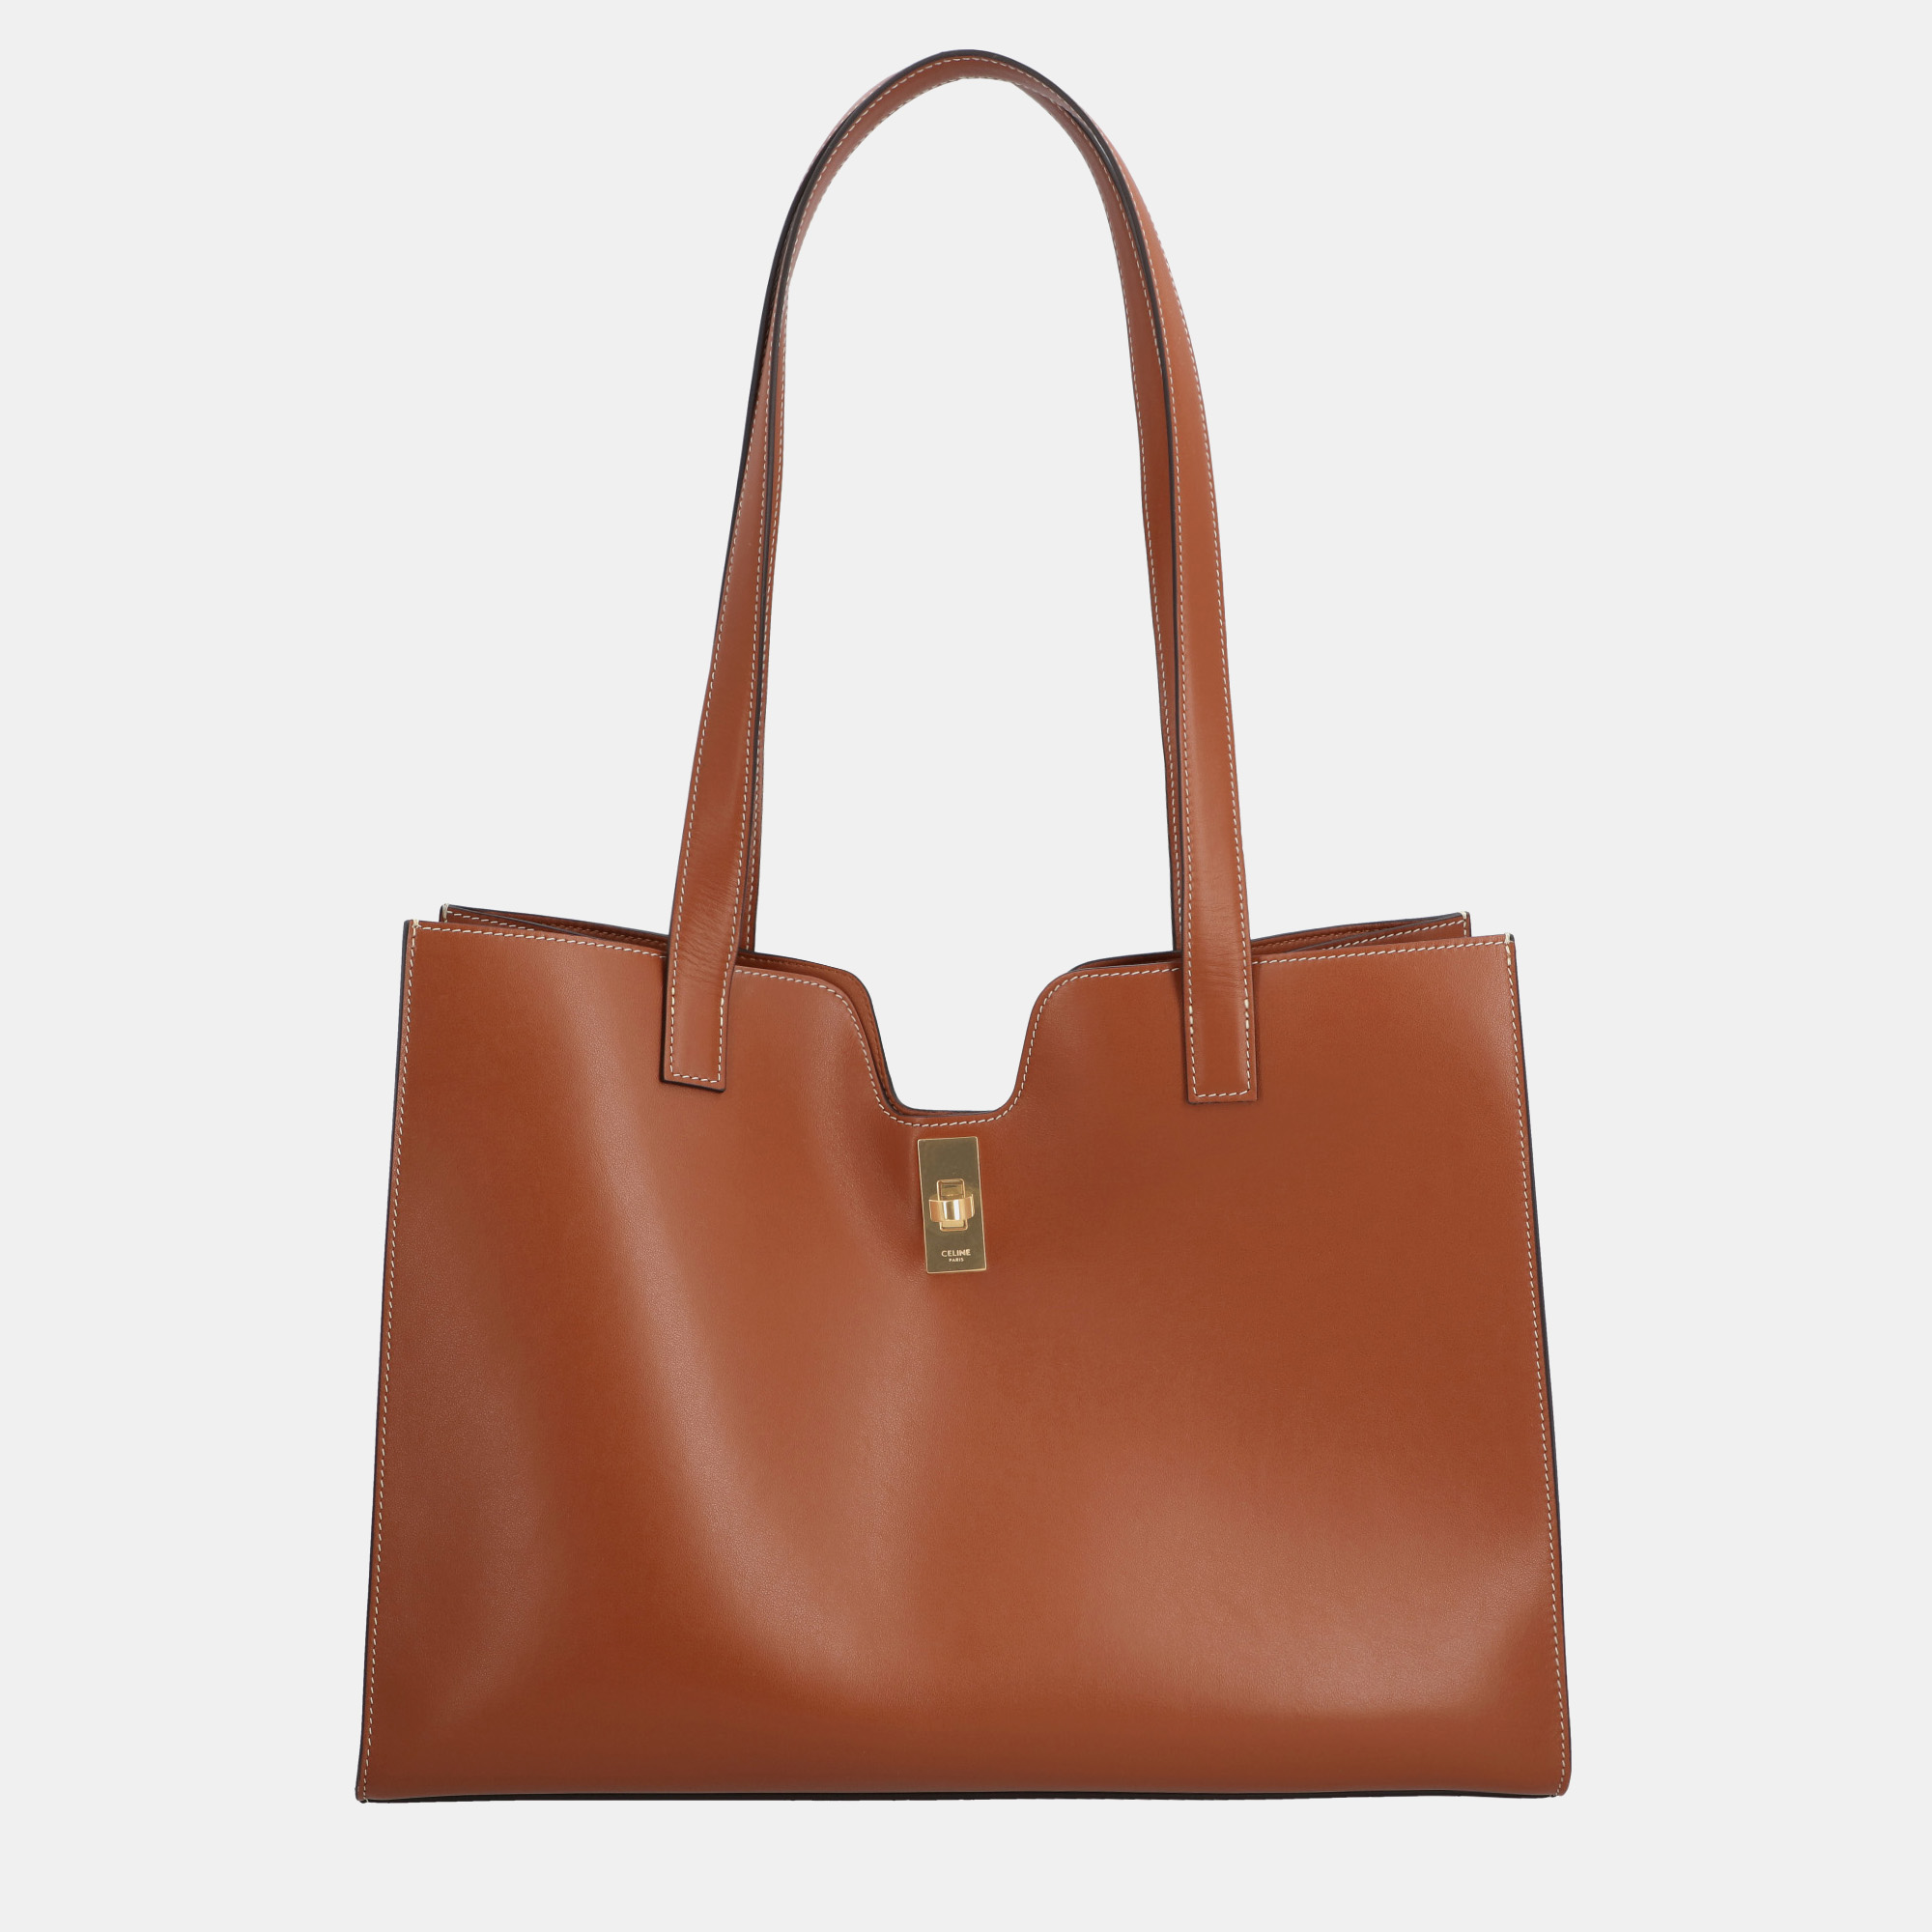 Celine brown leather smooth cabas 16 tote bag